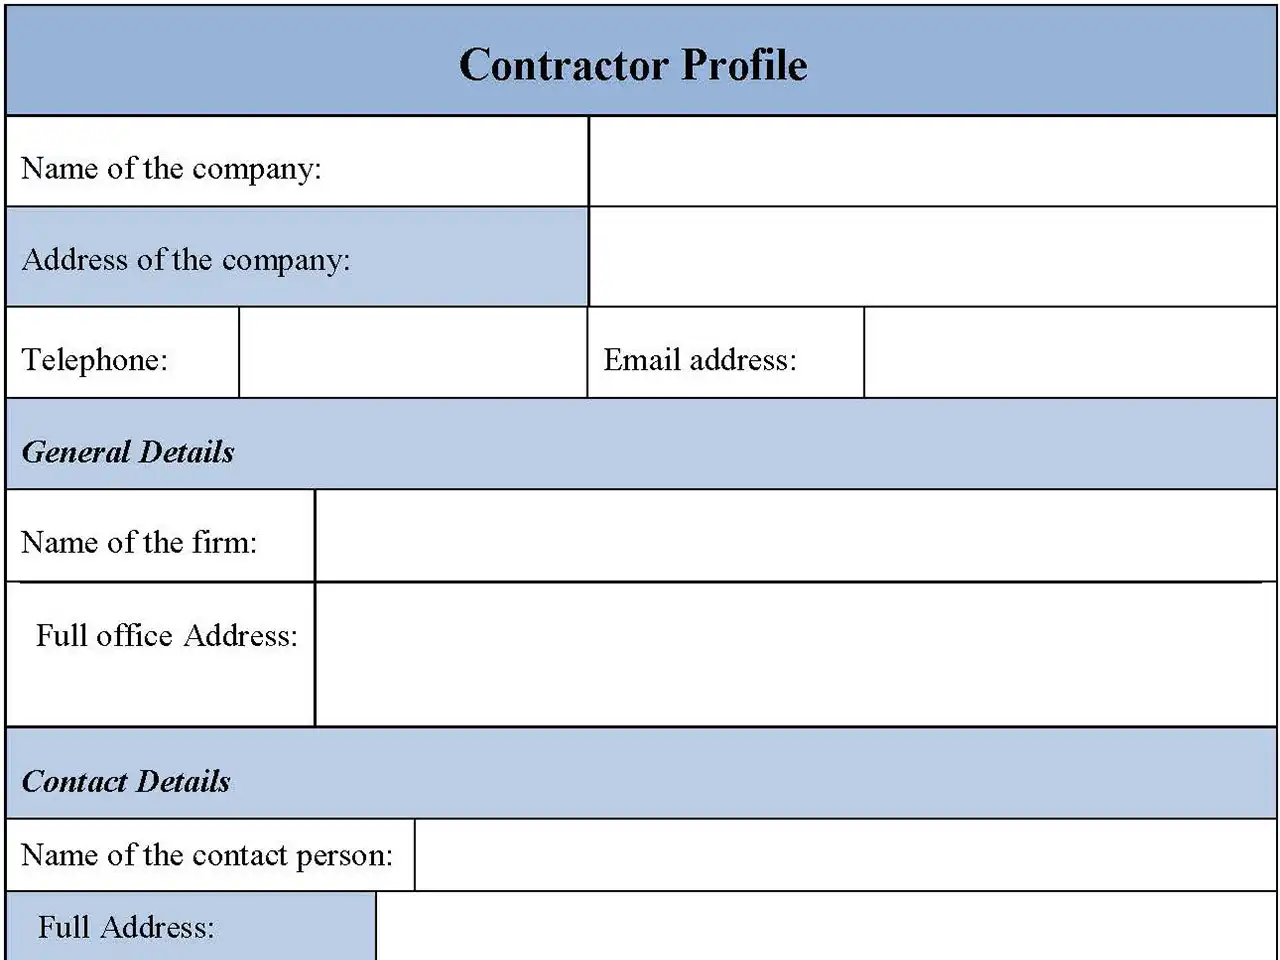 Contractor Profile Form